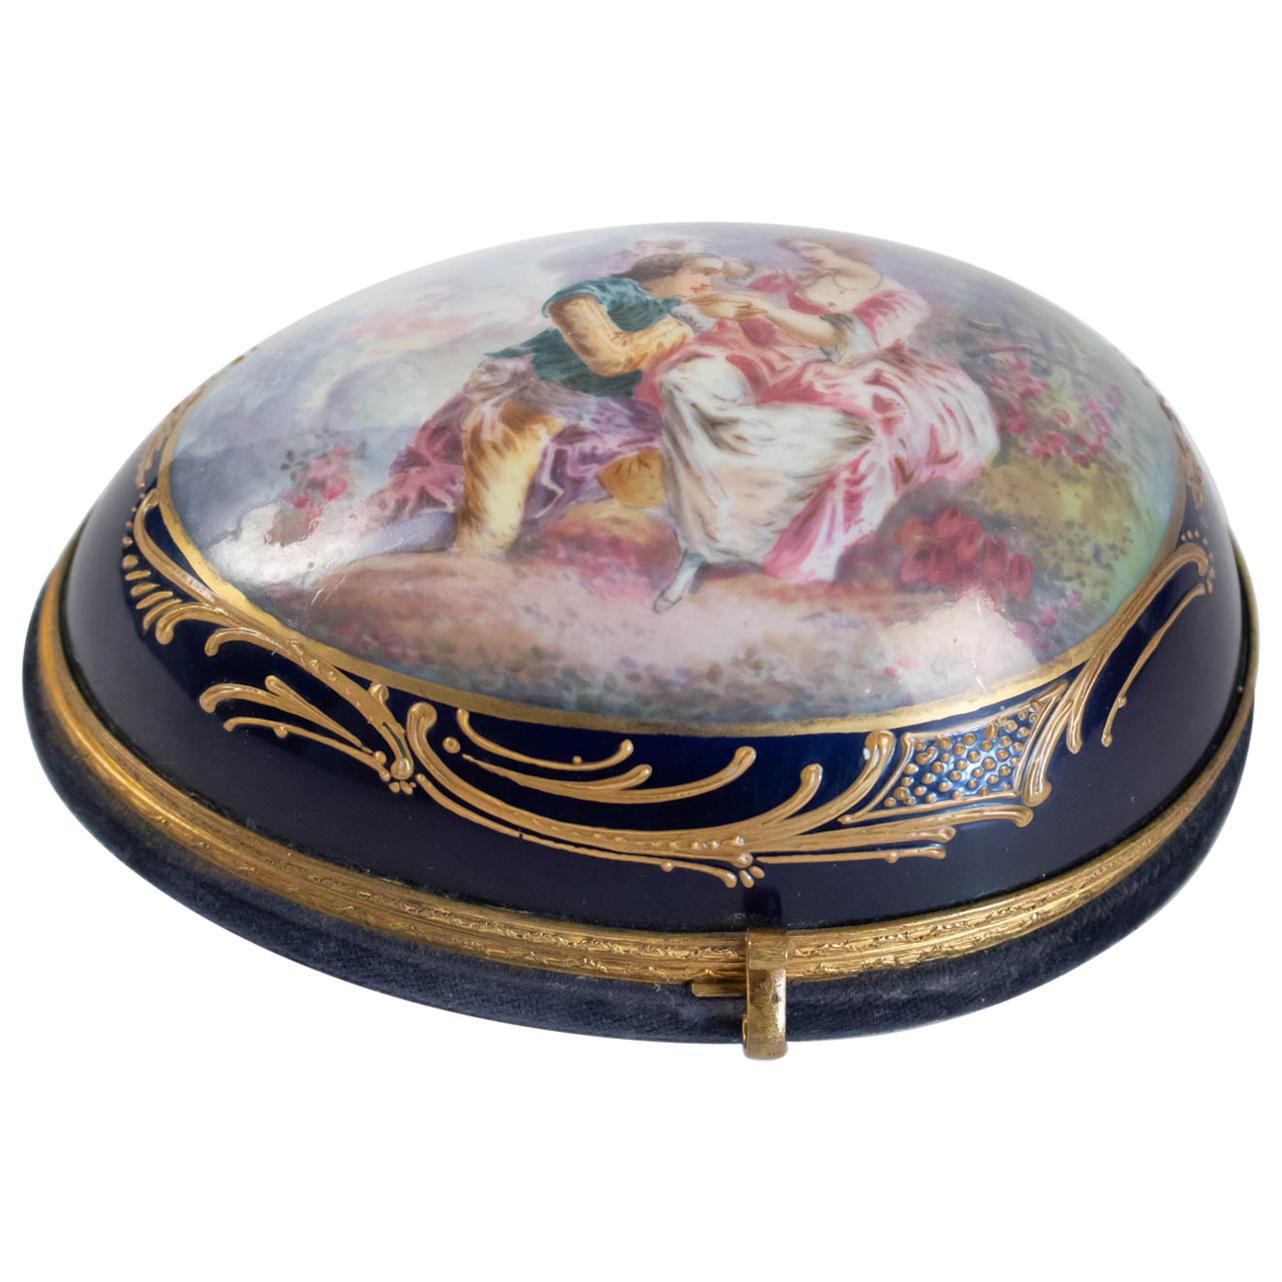 Half Egg Porcelain Sèvres Forming a Box, 19th Century, Napoleon III Period